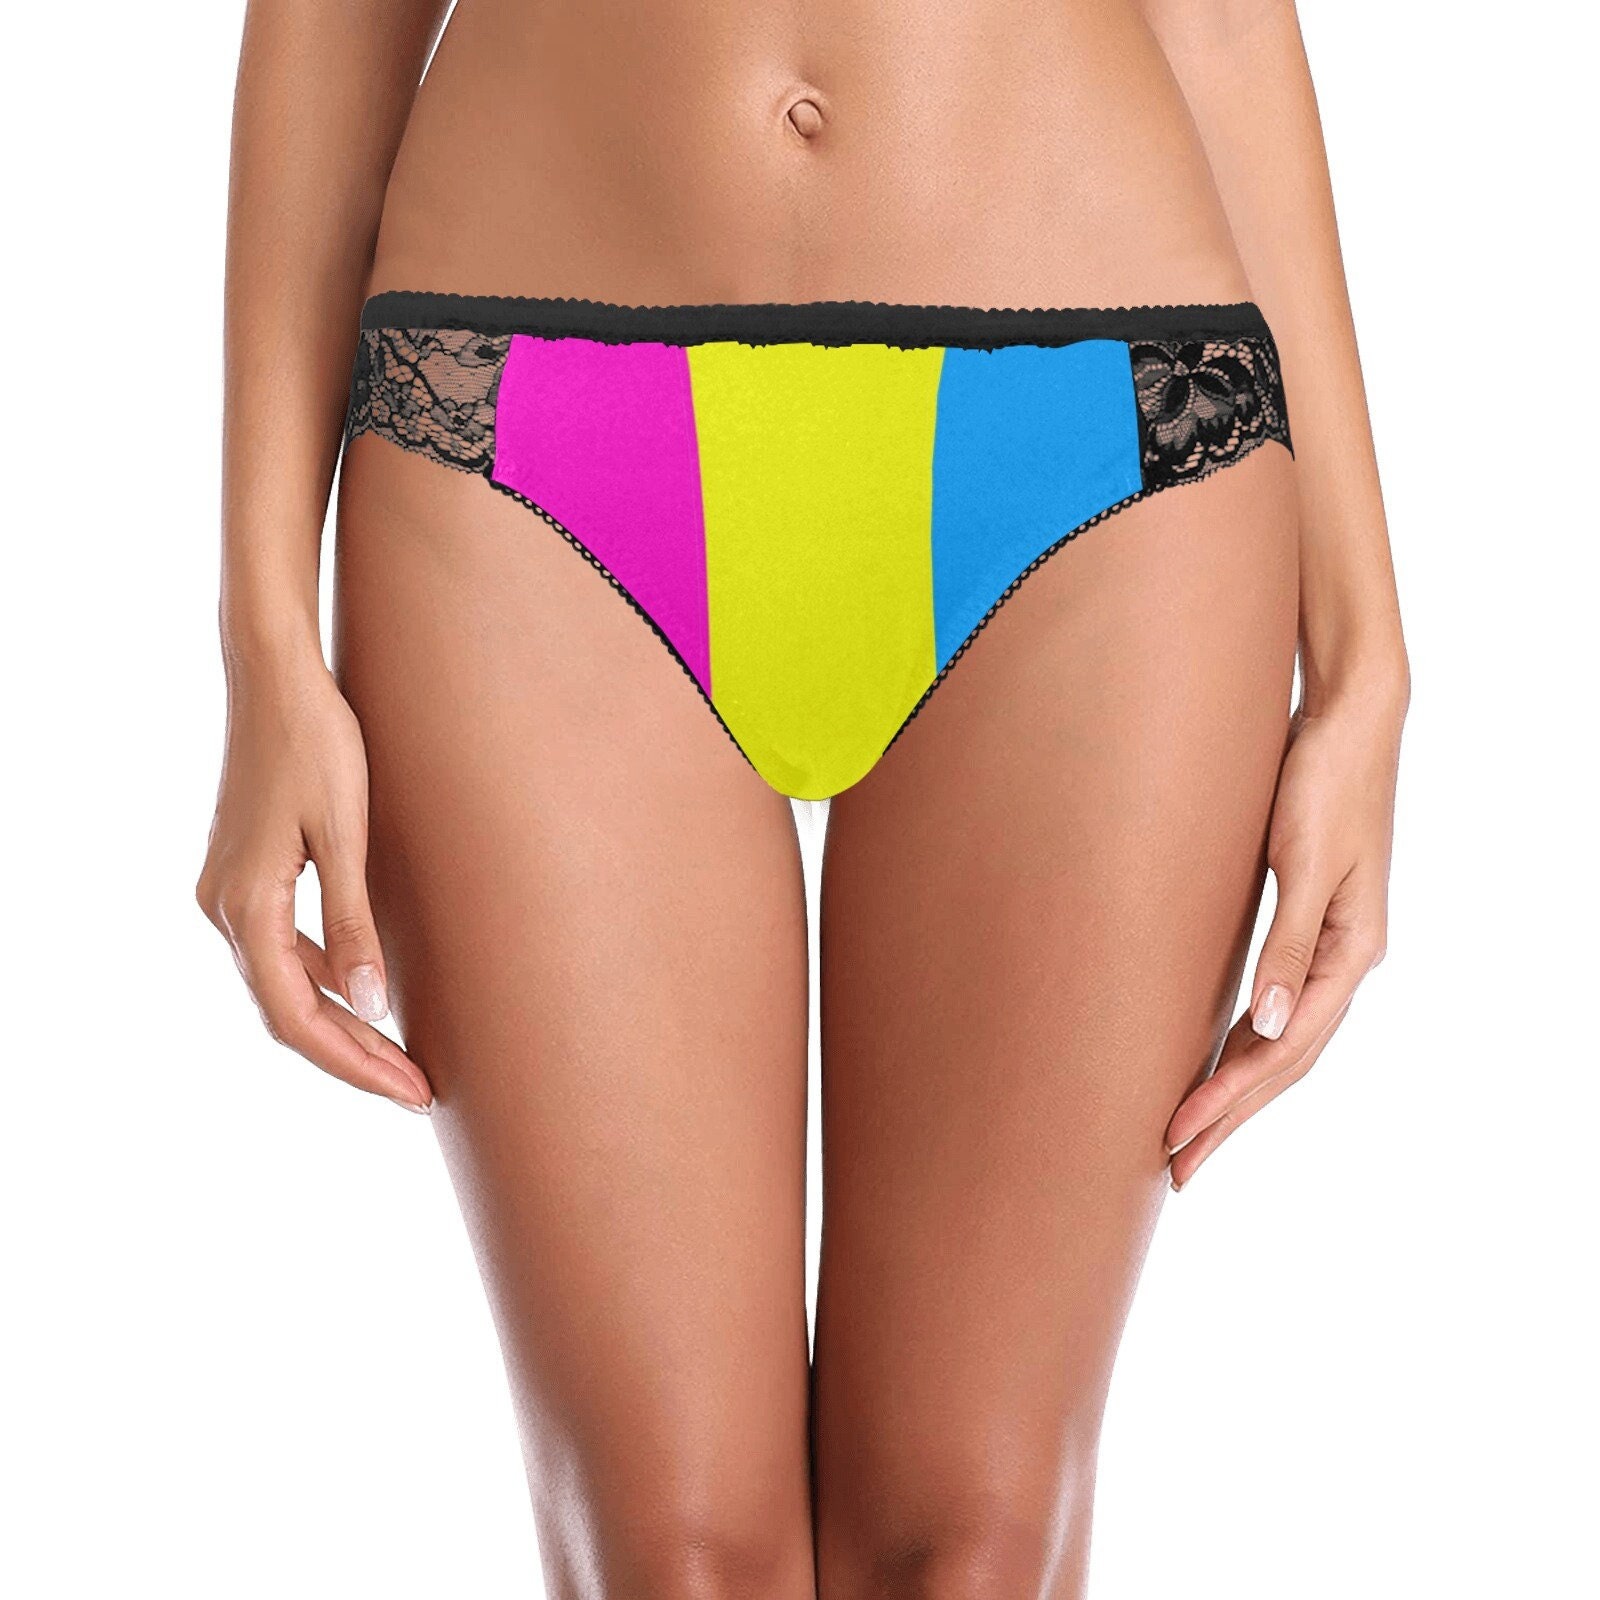 New Tie-Dye Ladies Underwear Cotton Panties - Rainbow Stripe